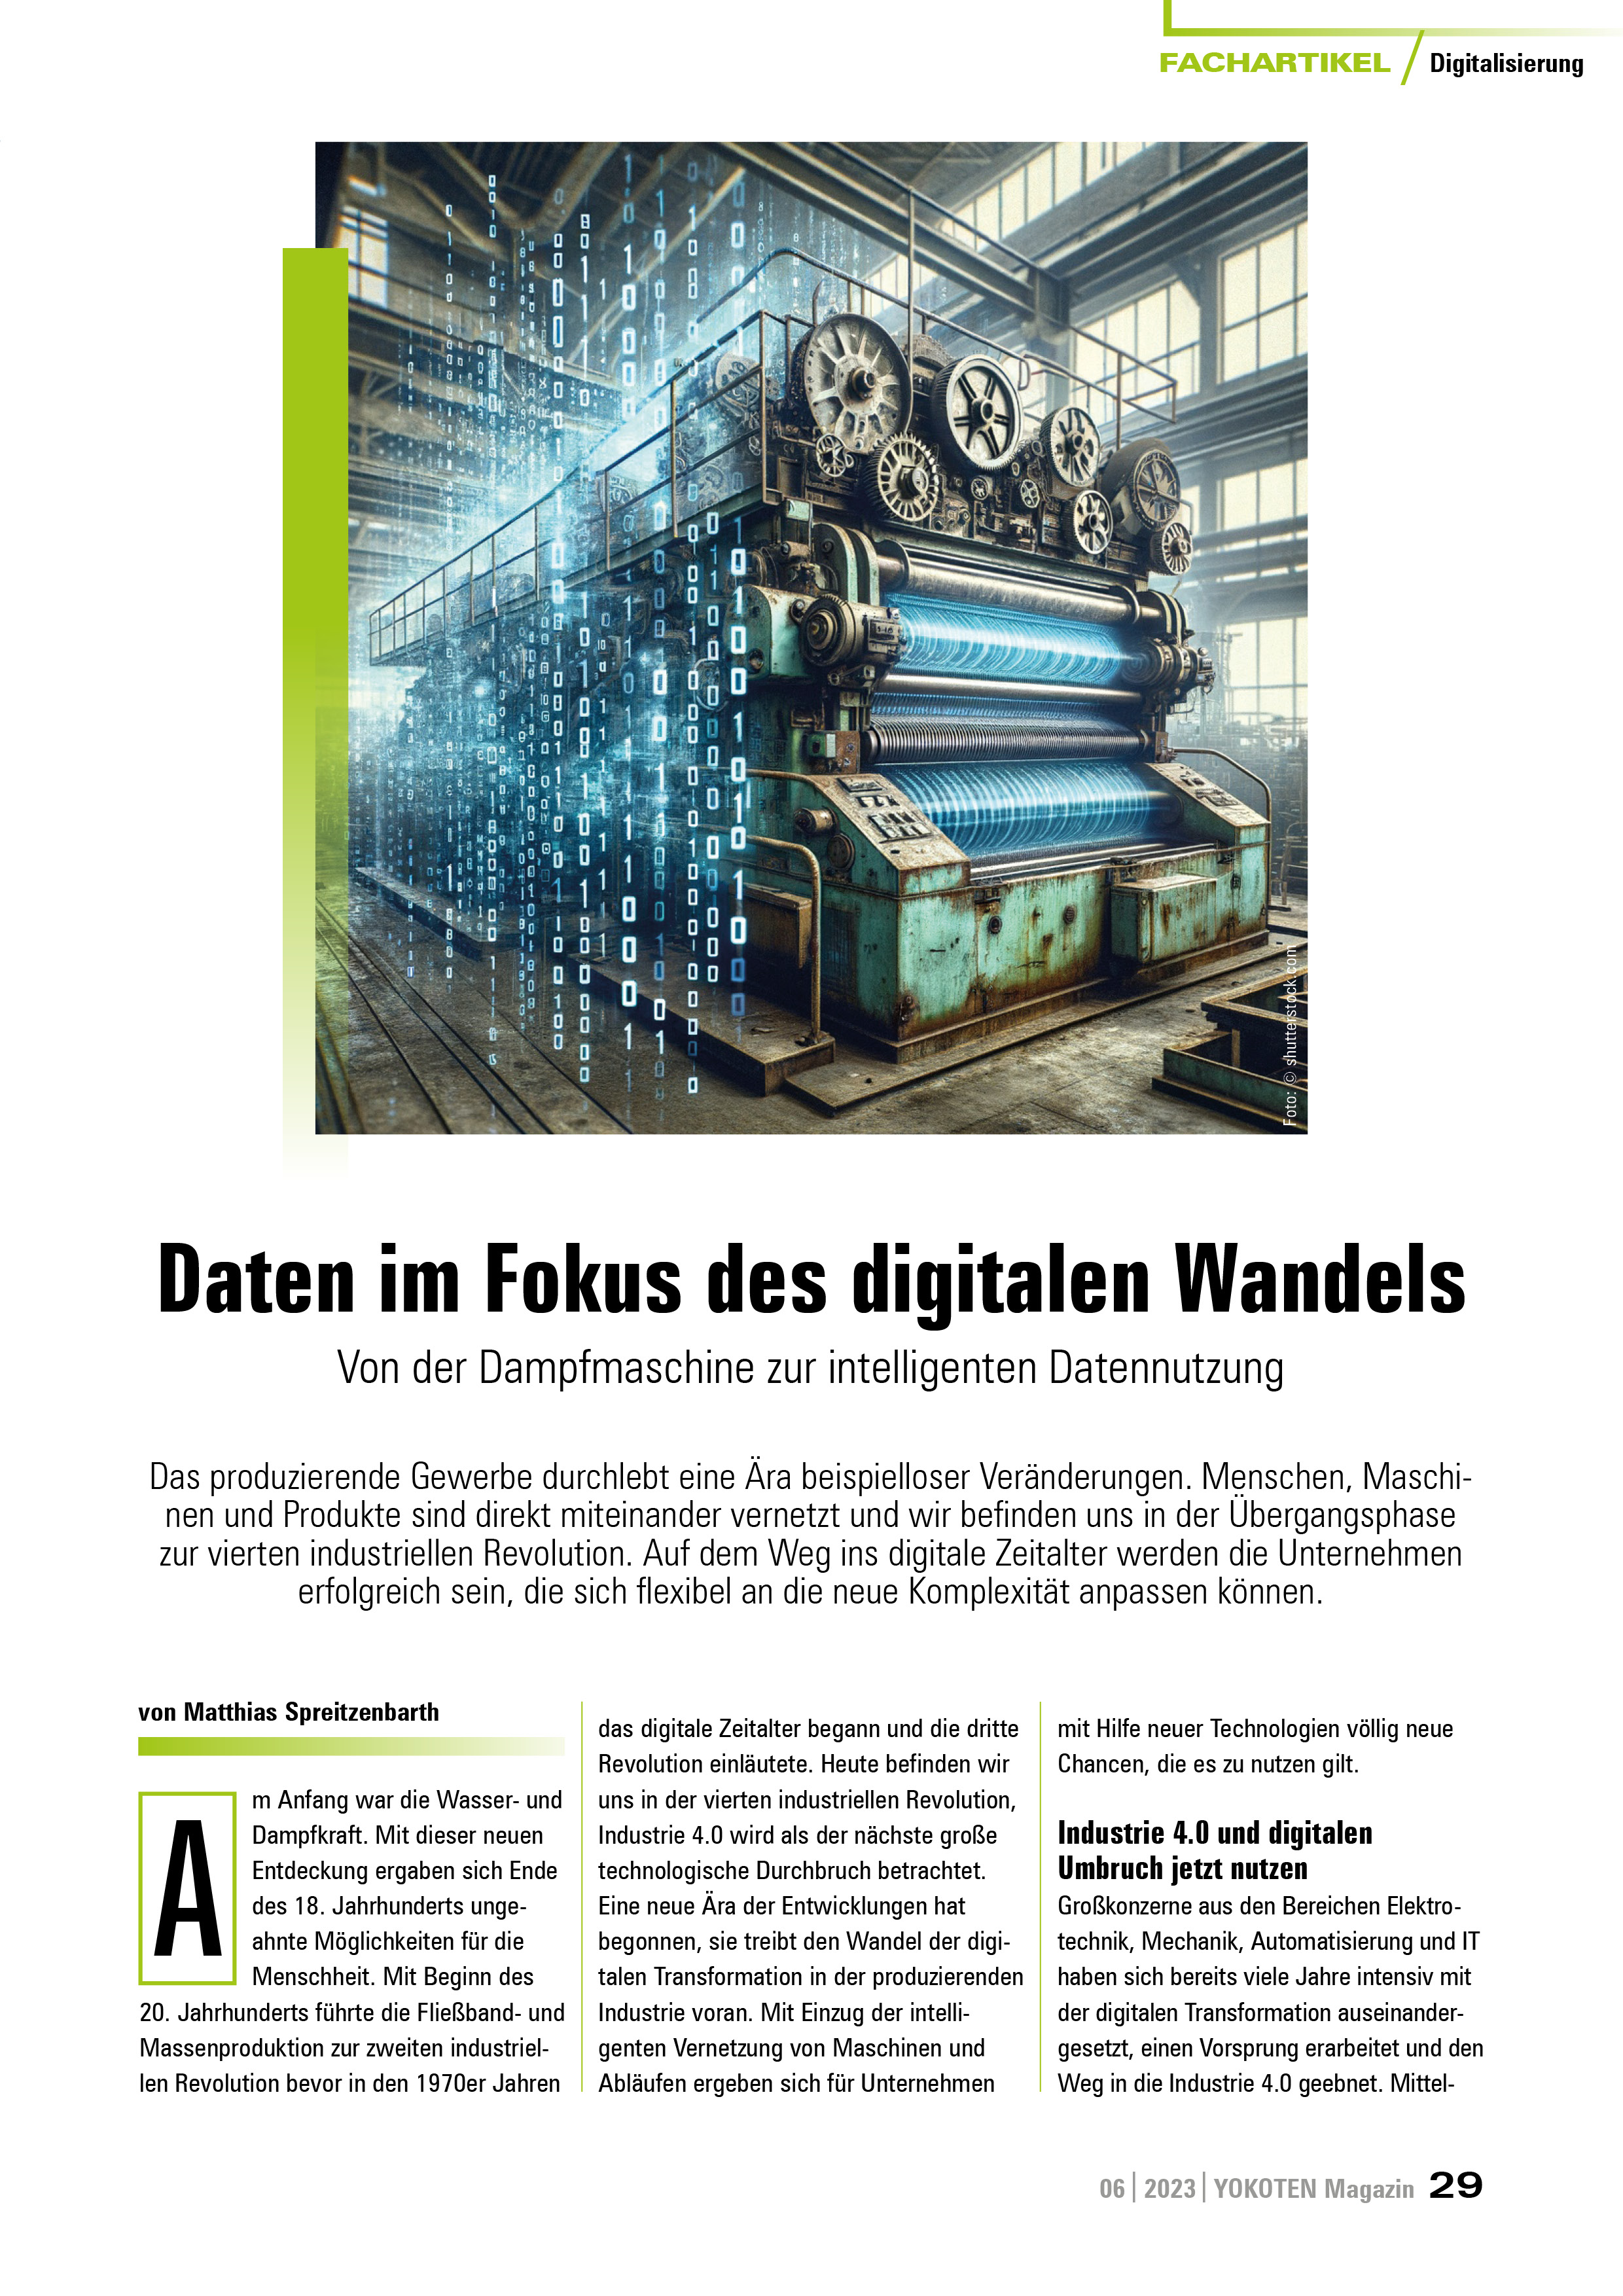 YOKOTEN-Artikel: Daten im Fokus des digitalen Wandels